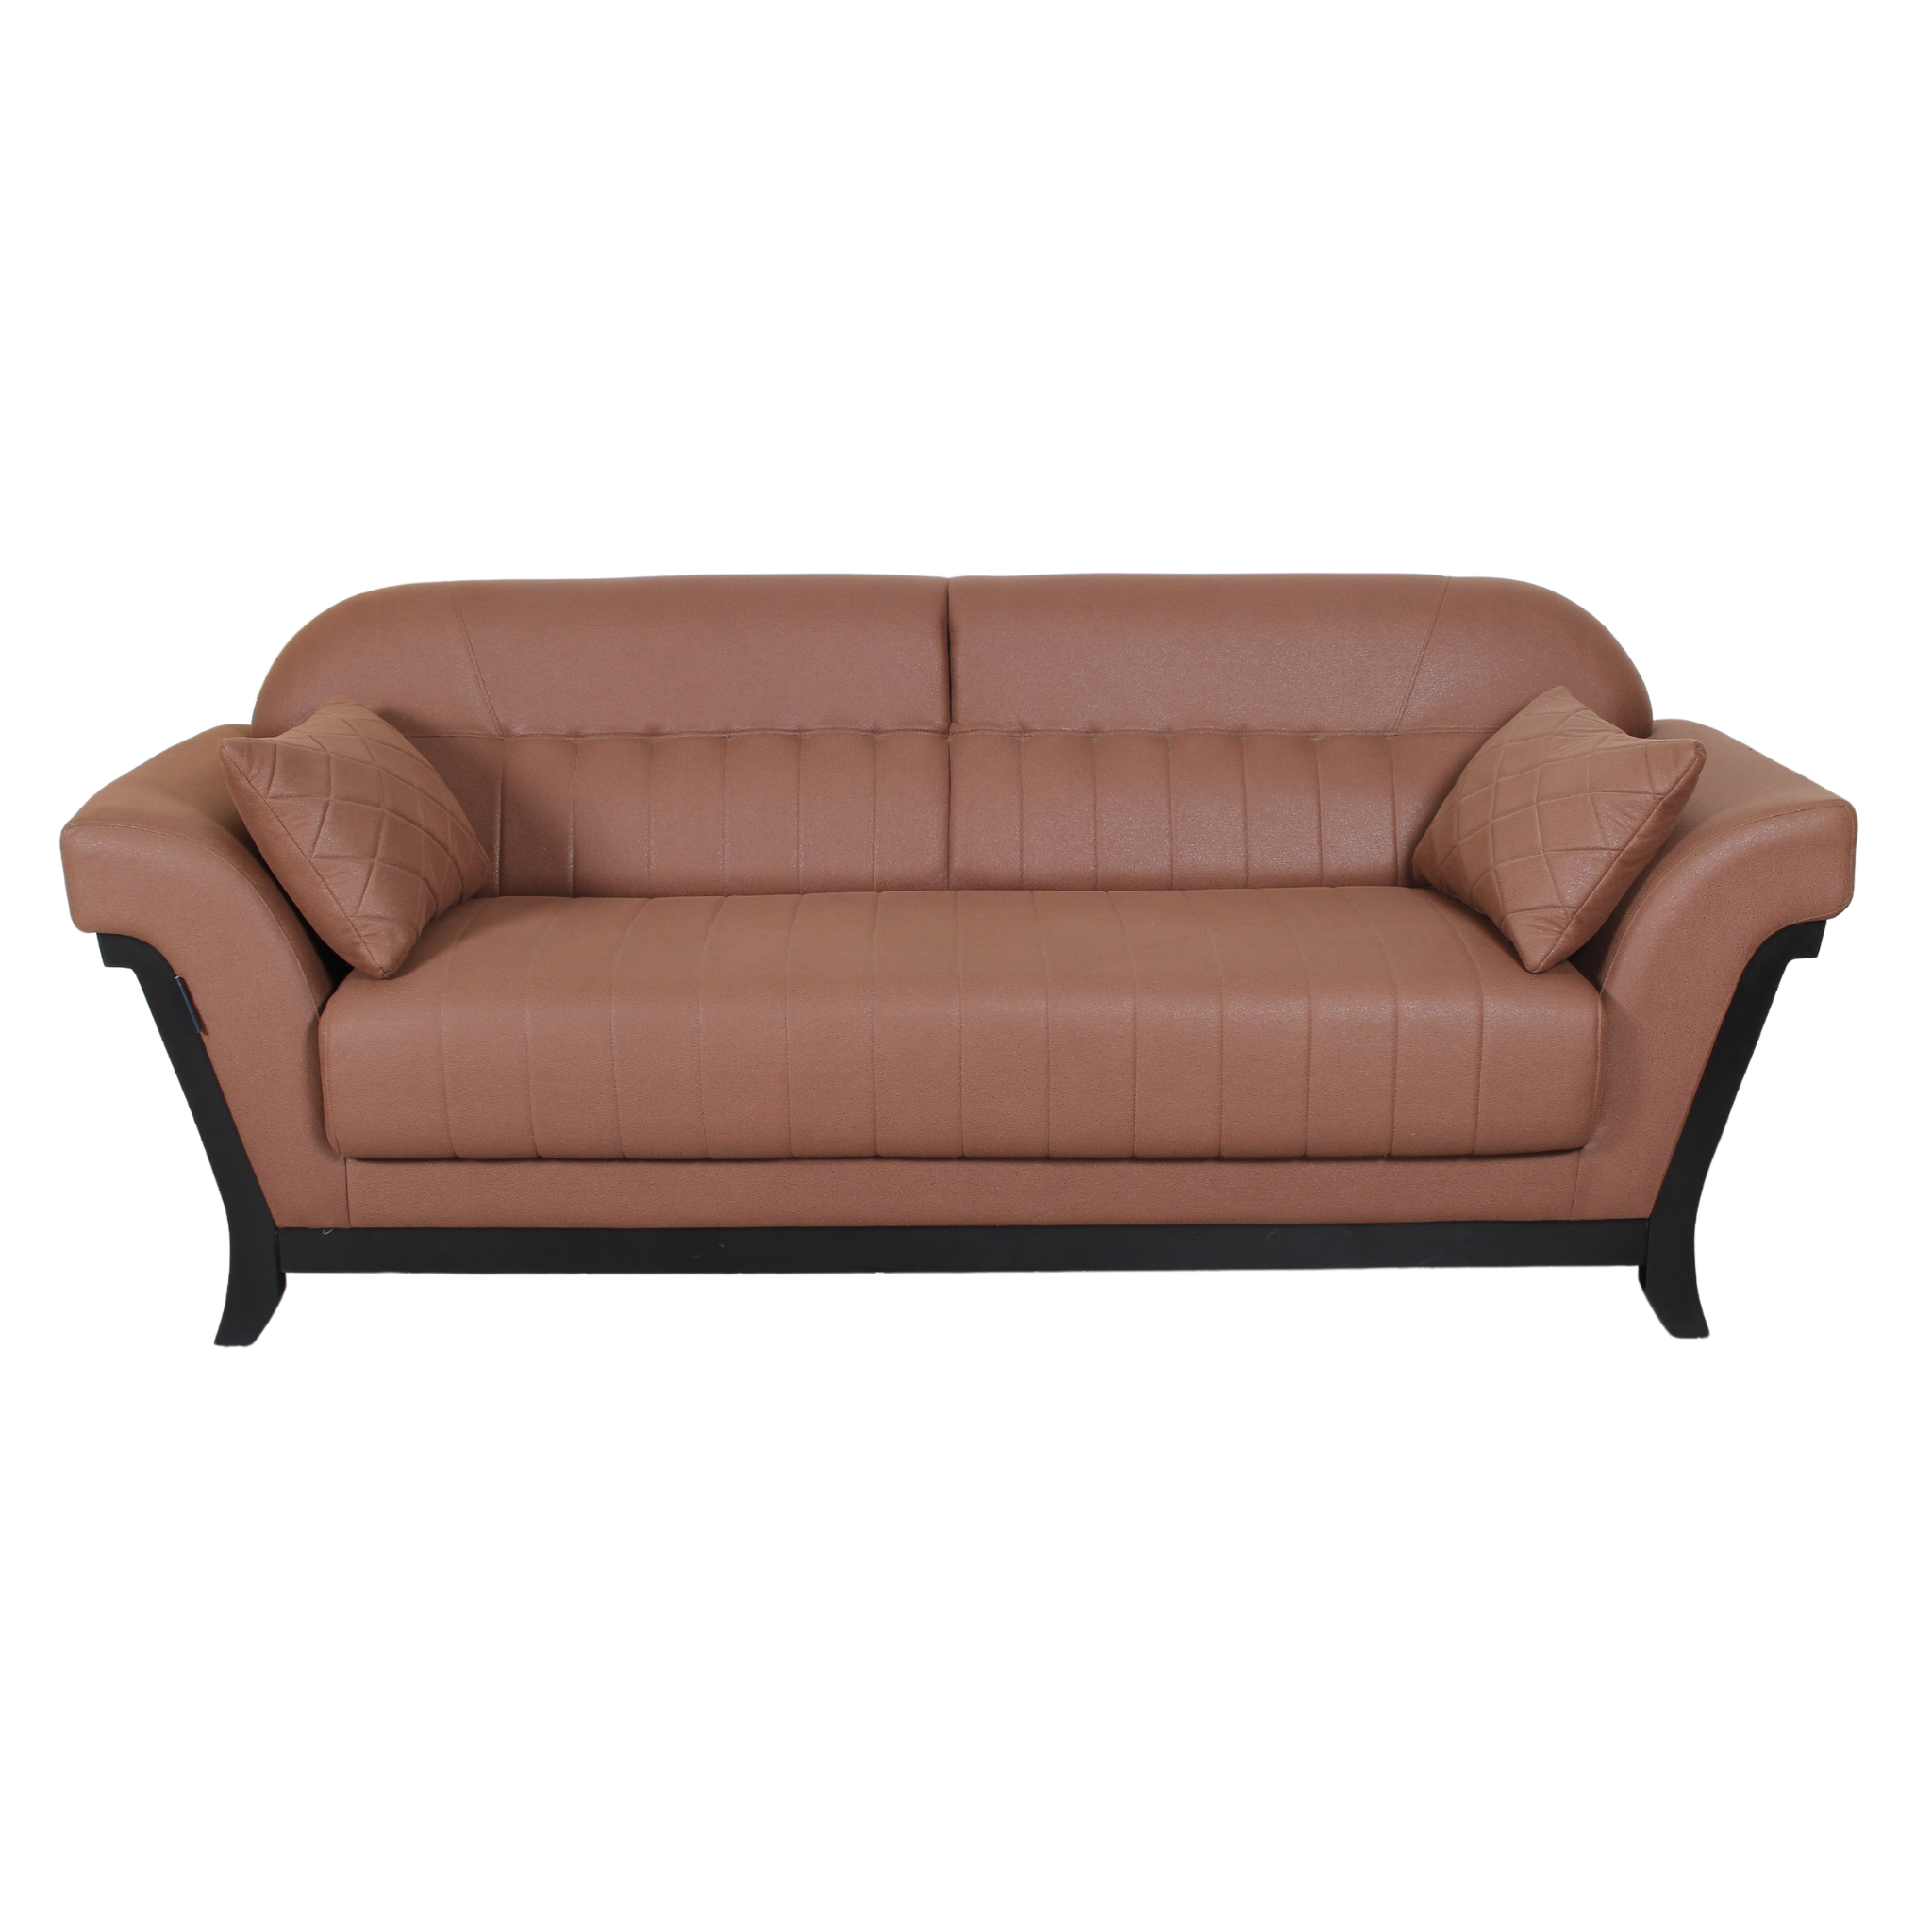 Elcro Leather Sofa